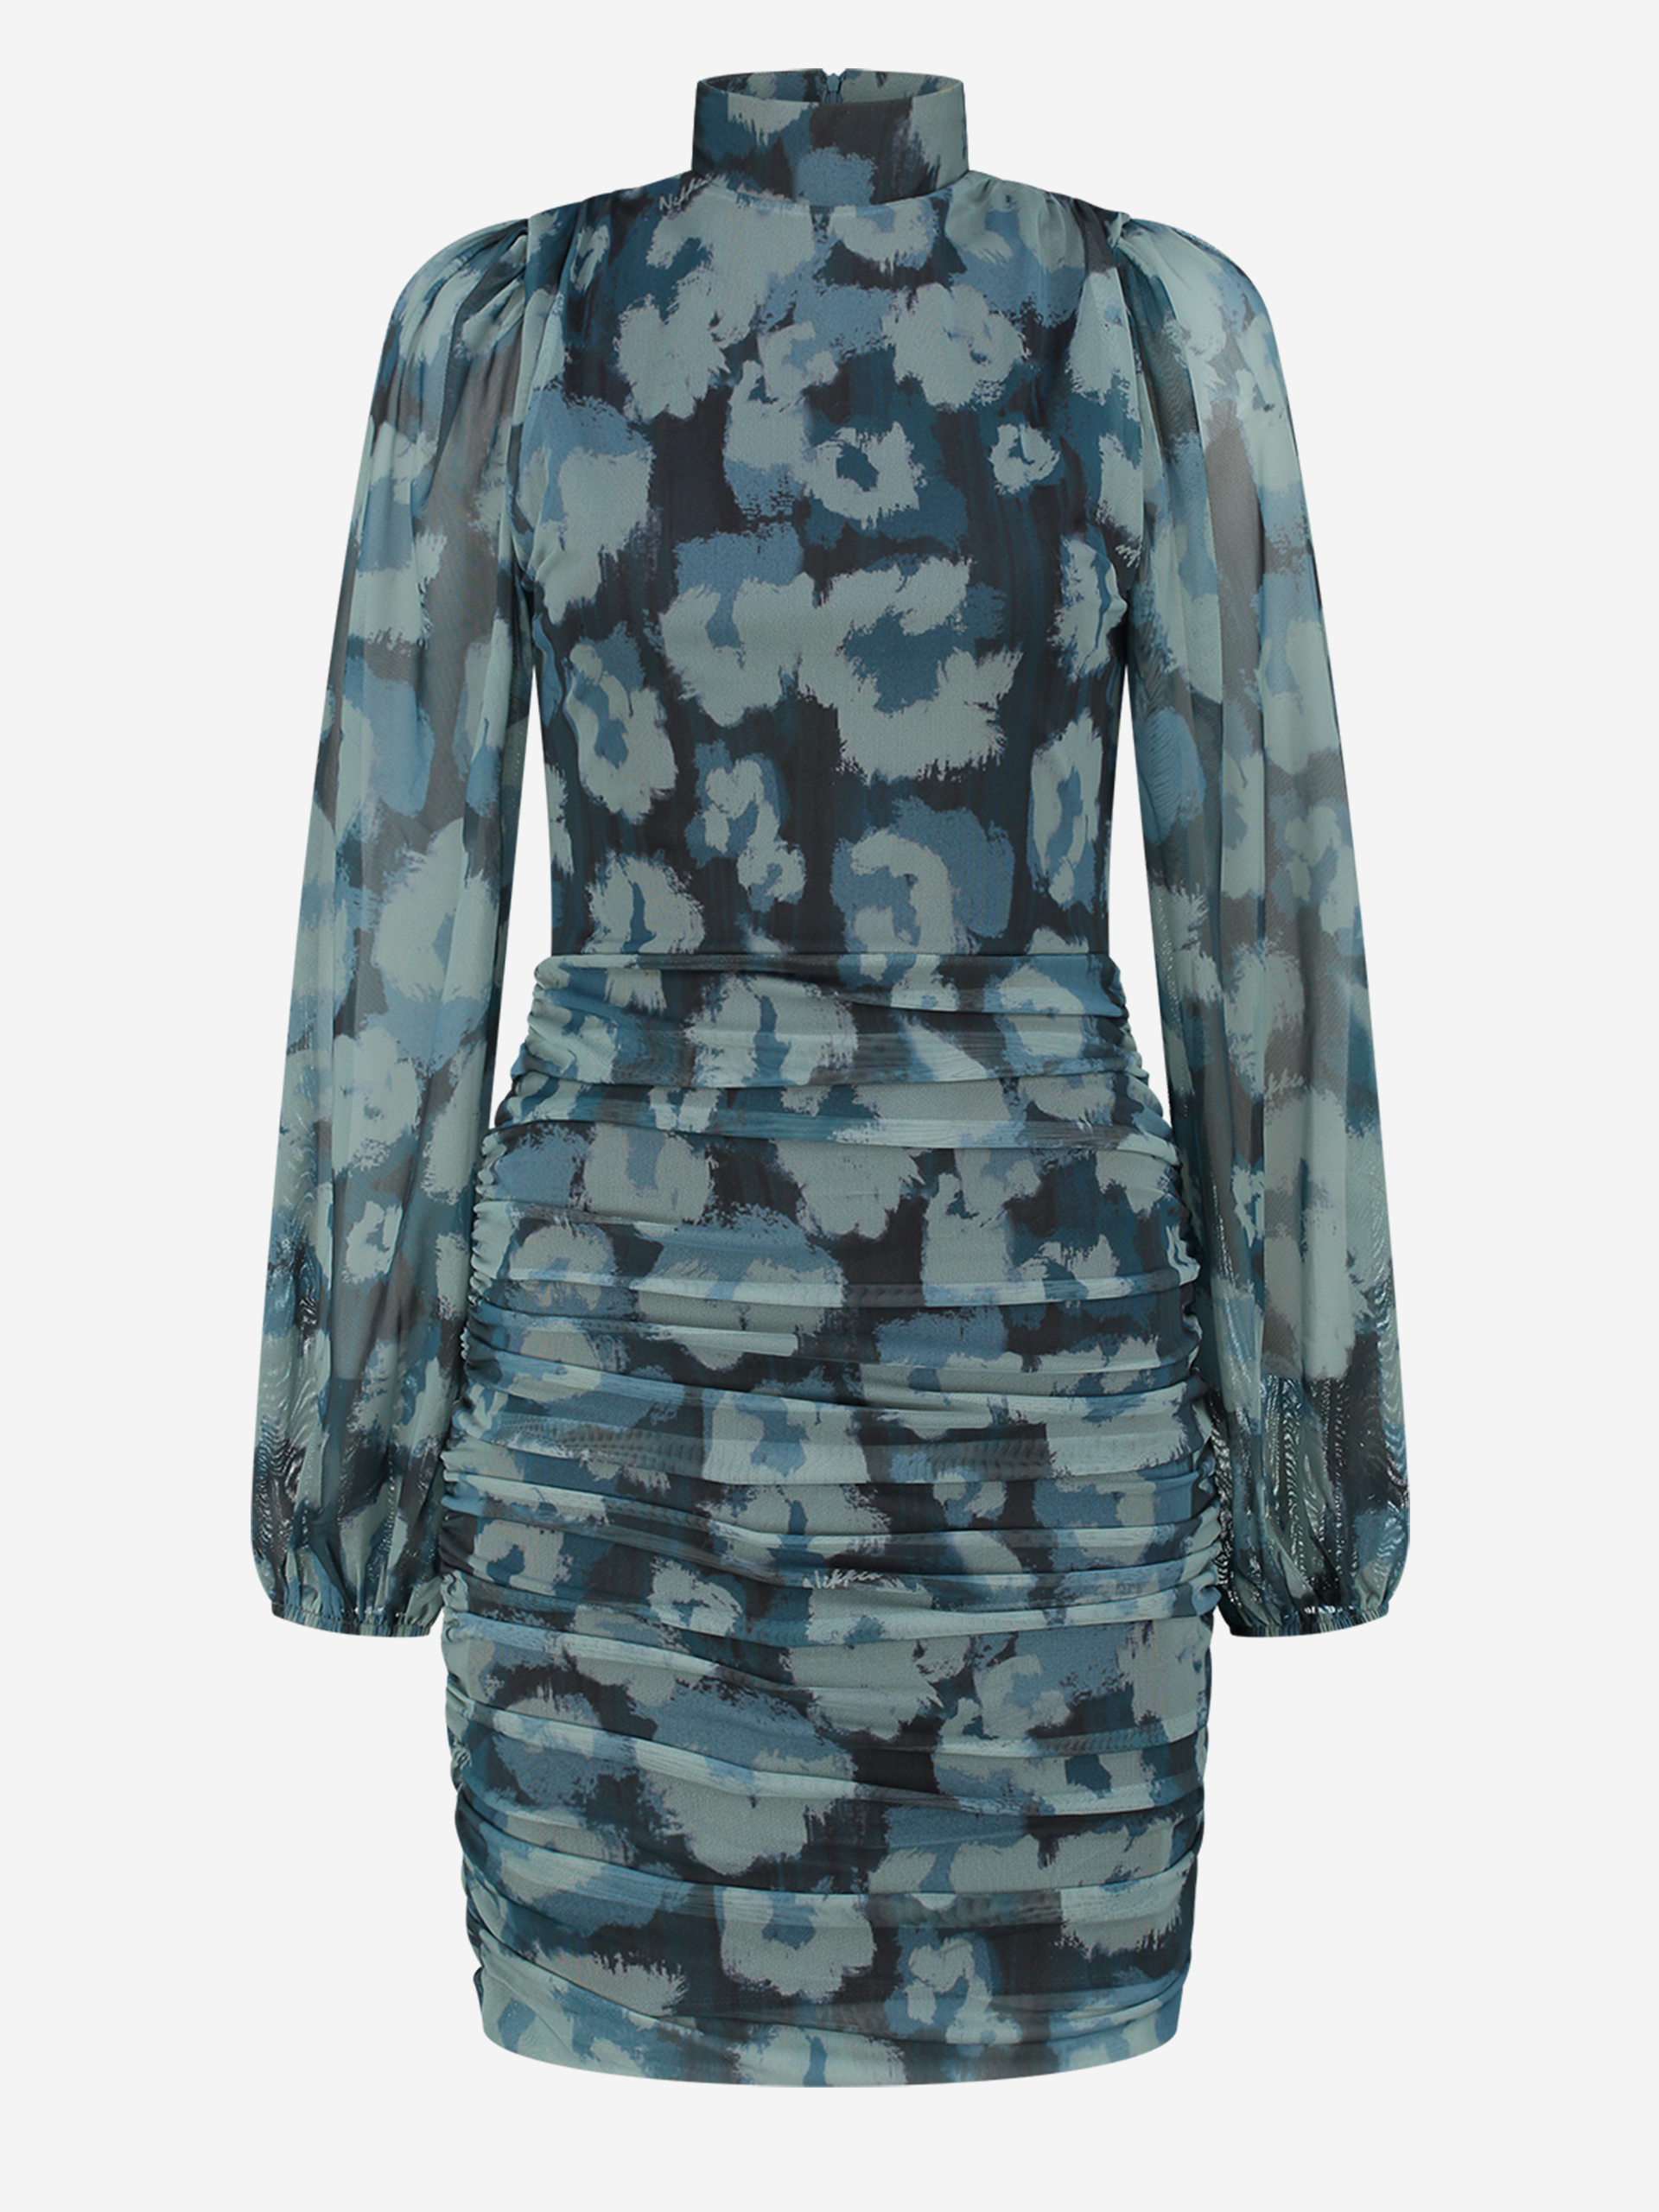 Mesh leopard print dress with tight fit 